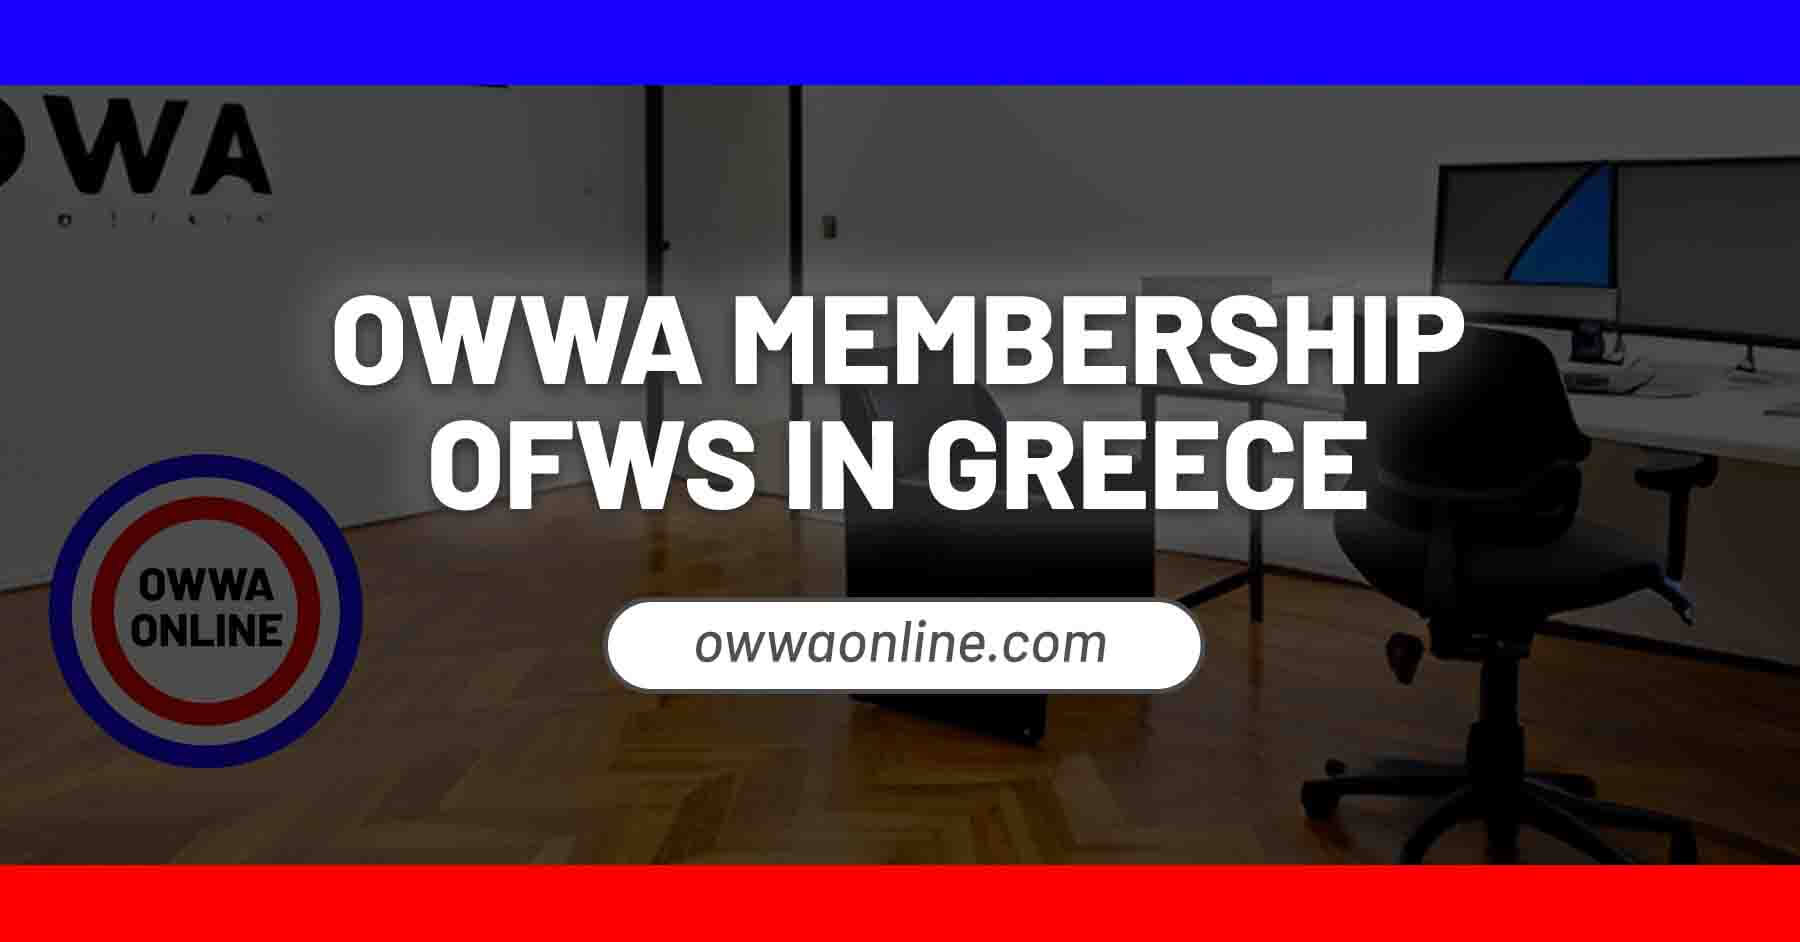 owwa appointment greece renewal application